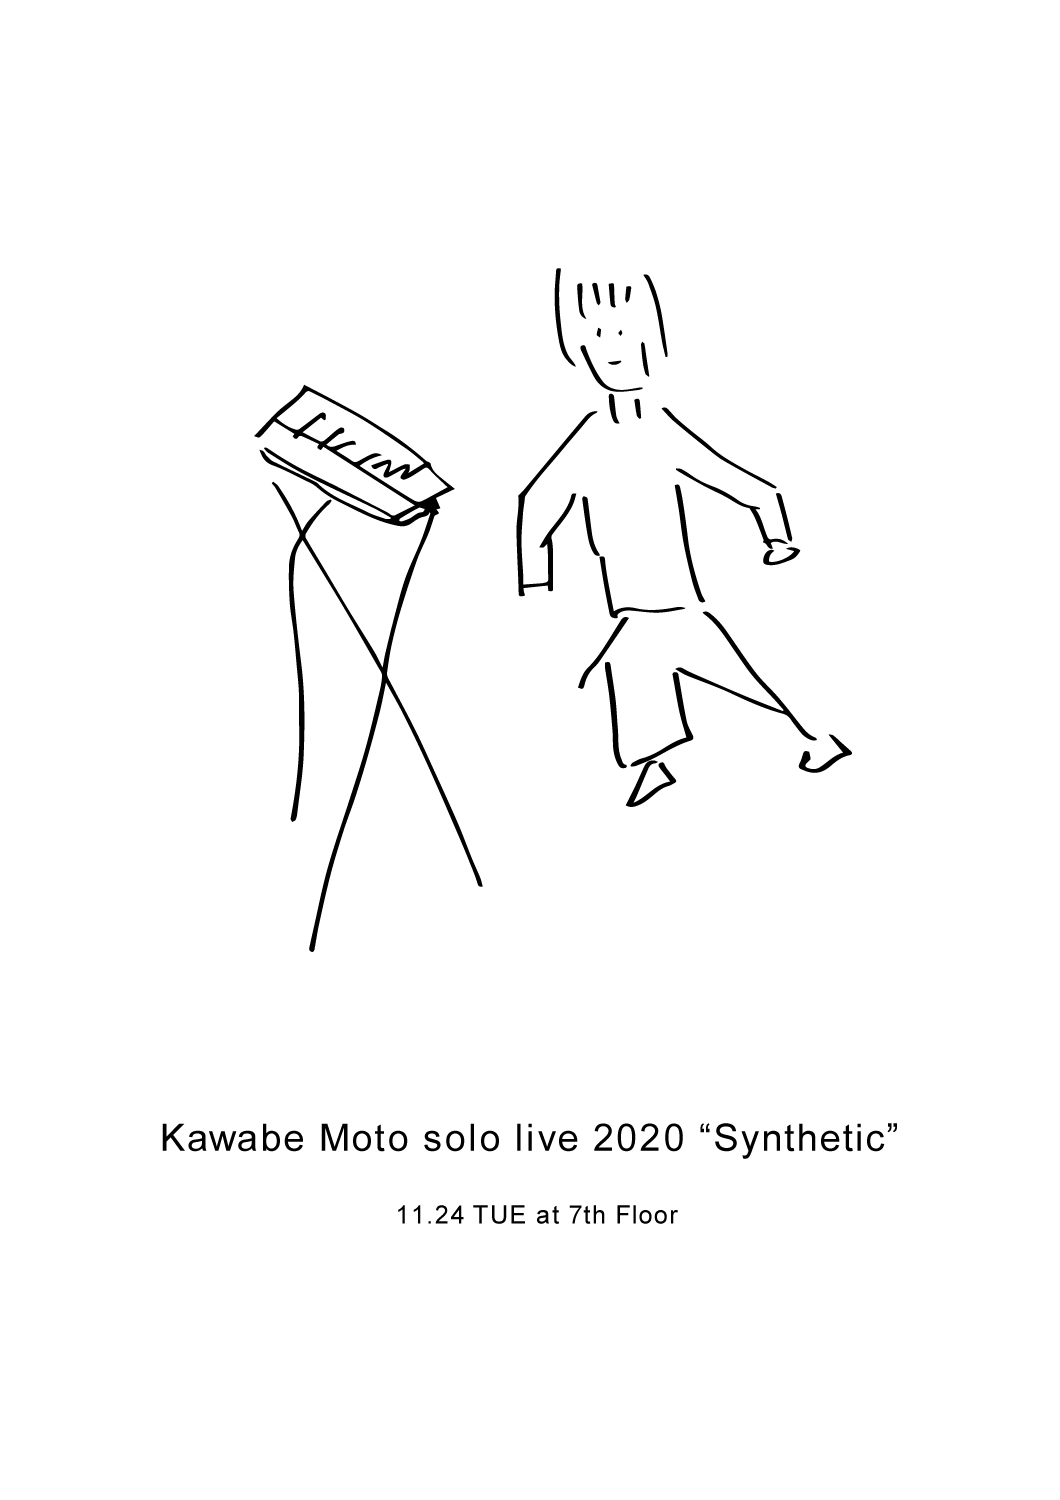 Kawabe Moto solo live 2020 “Synthetic”